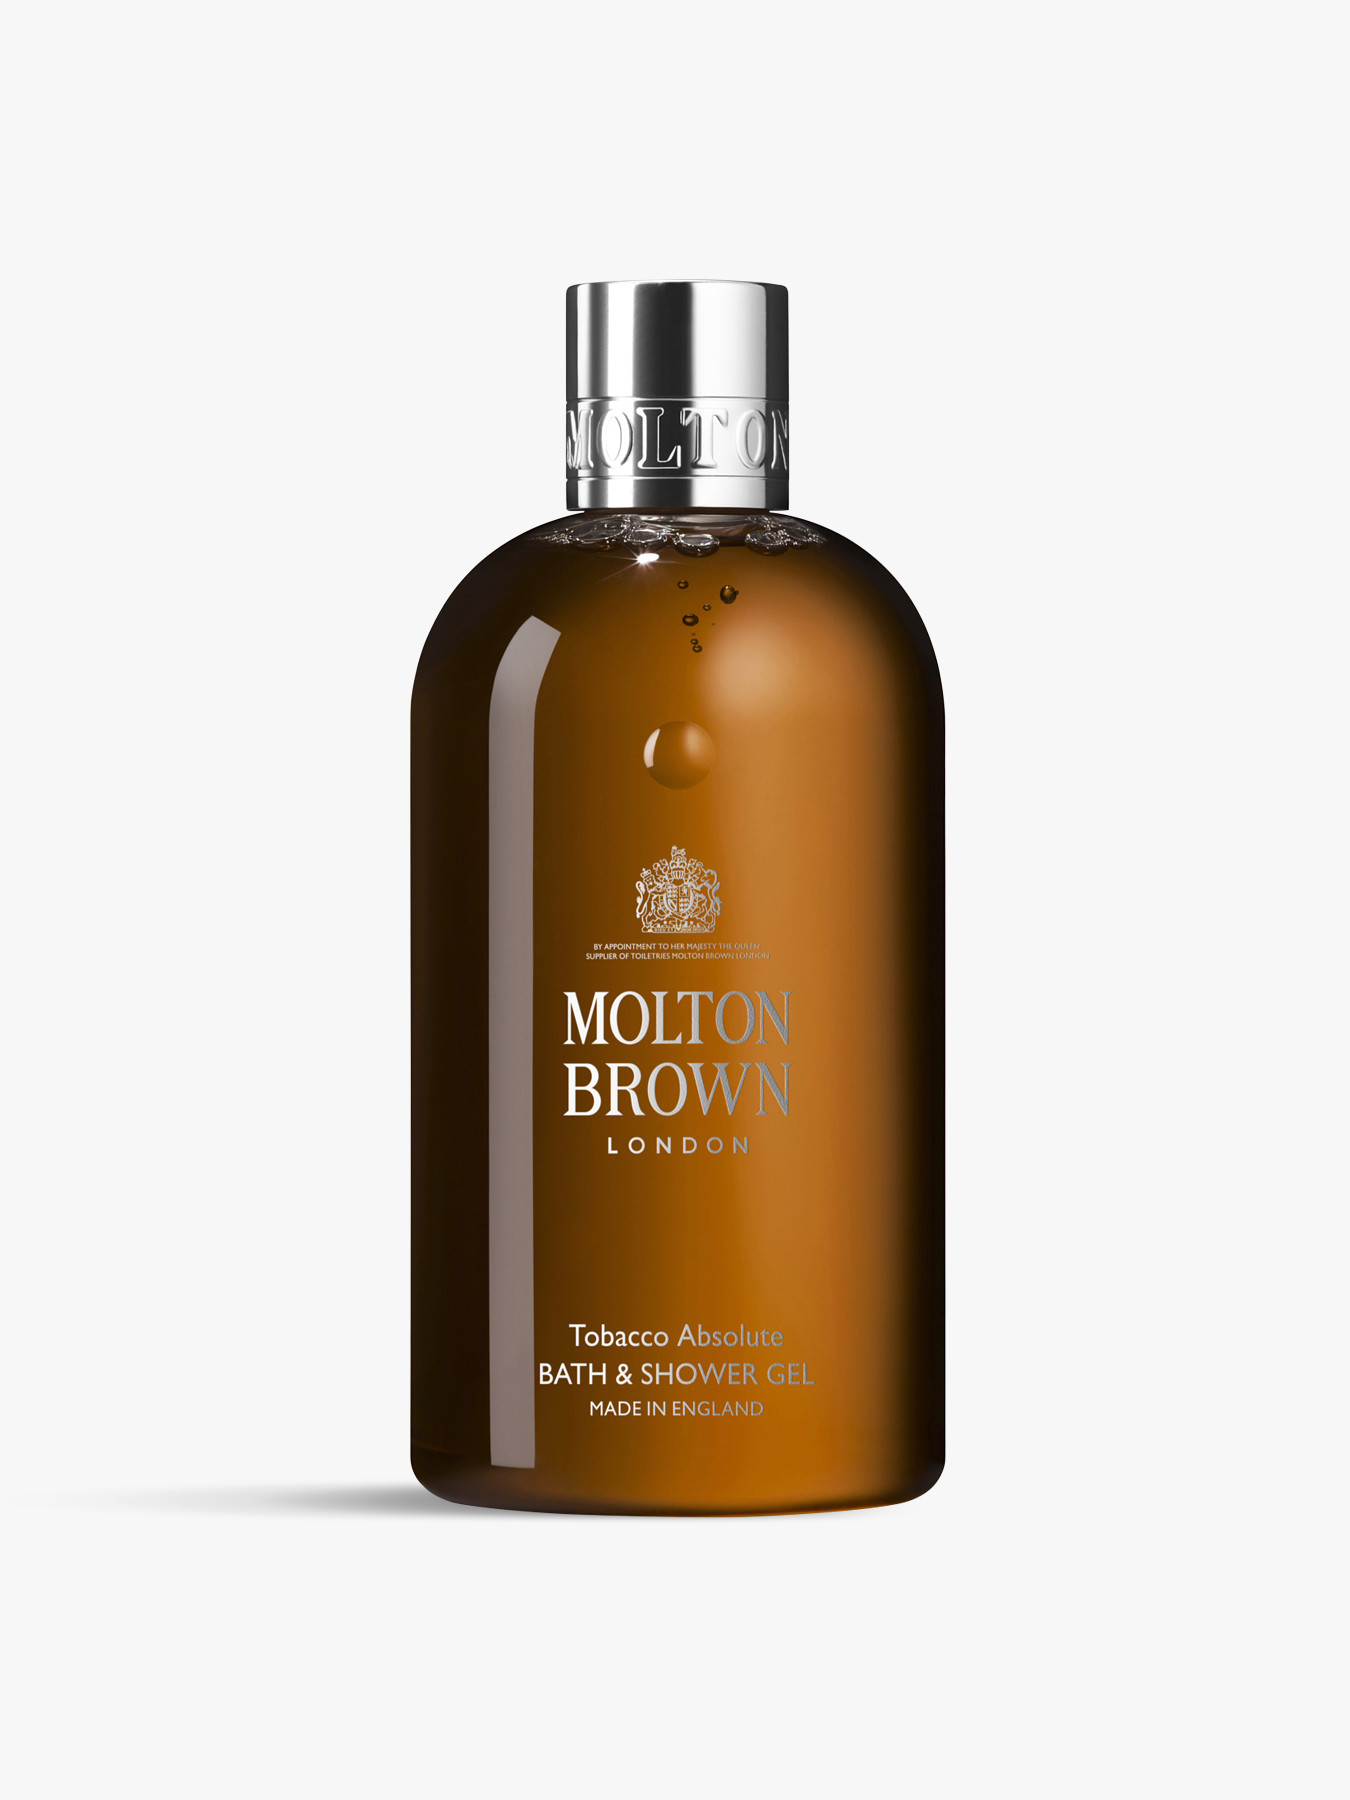 Molton Brown Tobacco Absolute Bath & Shower Gel